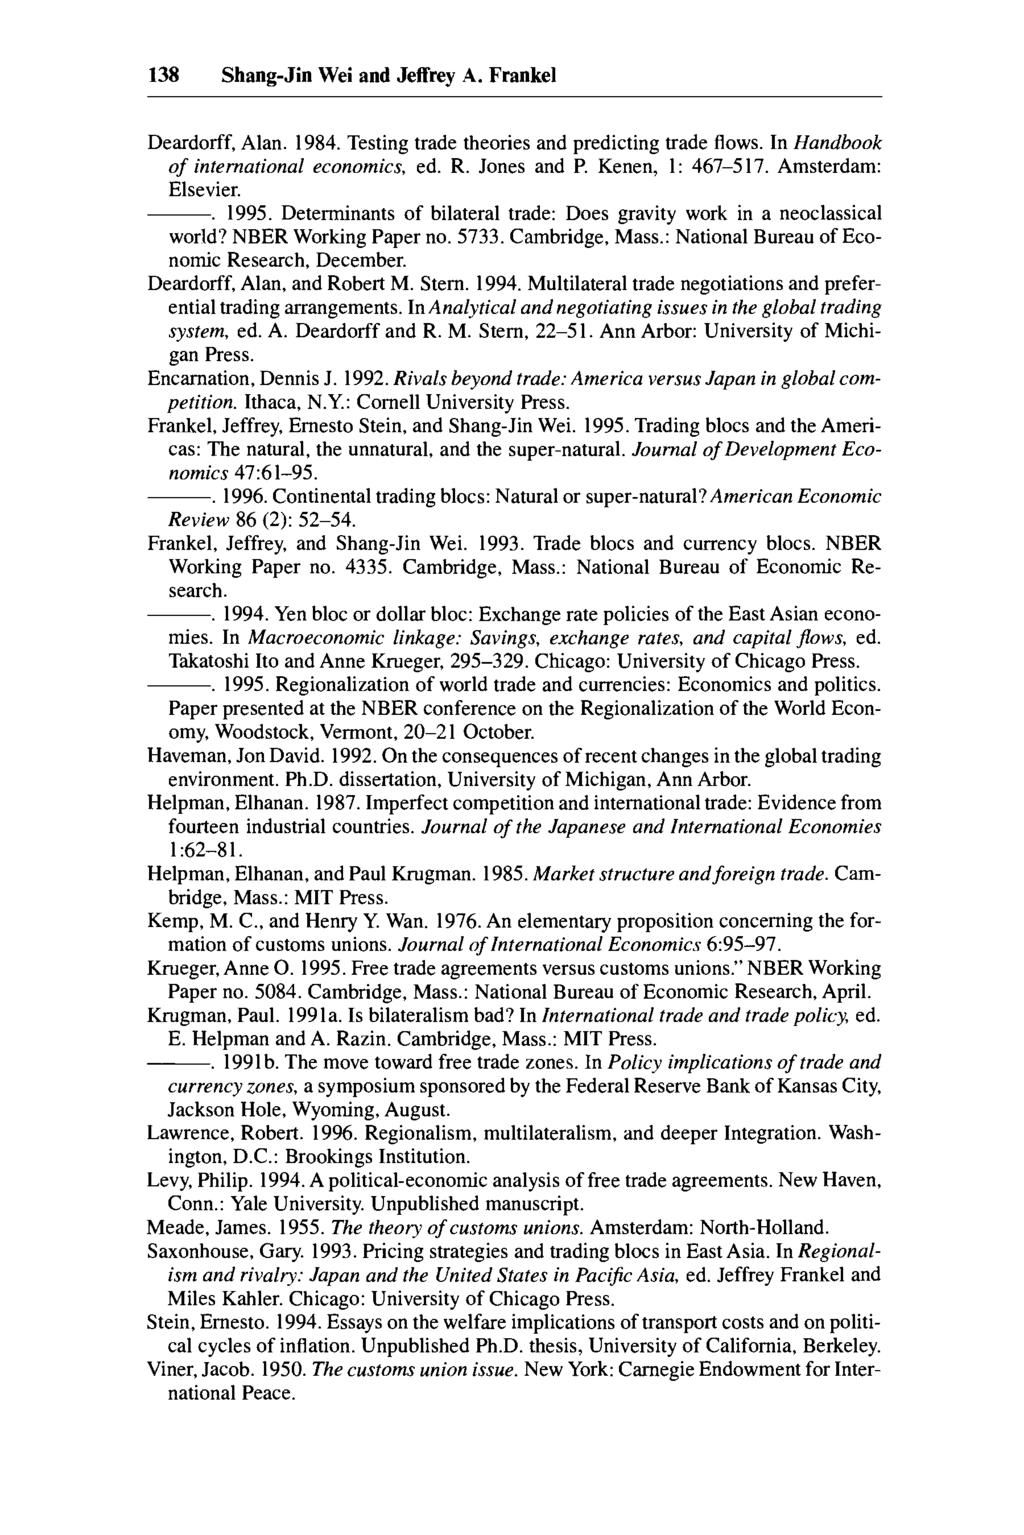 138 Shang-Jin Wei and Jeffrey A. Frankel Deardorff, Alan. 1984. Testing trade theories and predicting trade flows. In Handbook of international economics, ed. R. Jones and P. Kenen, 1: 467-517.